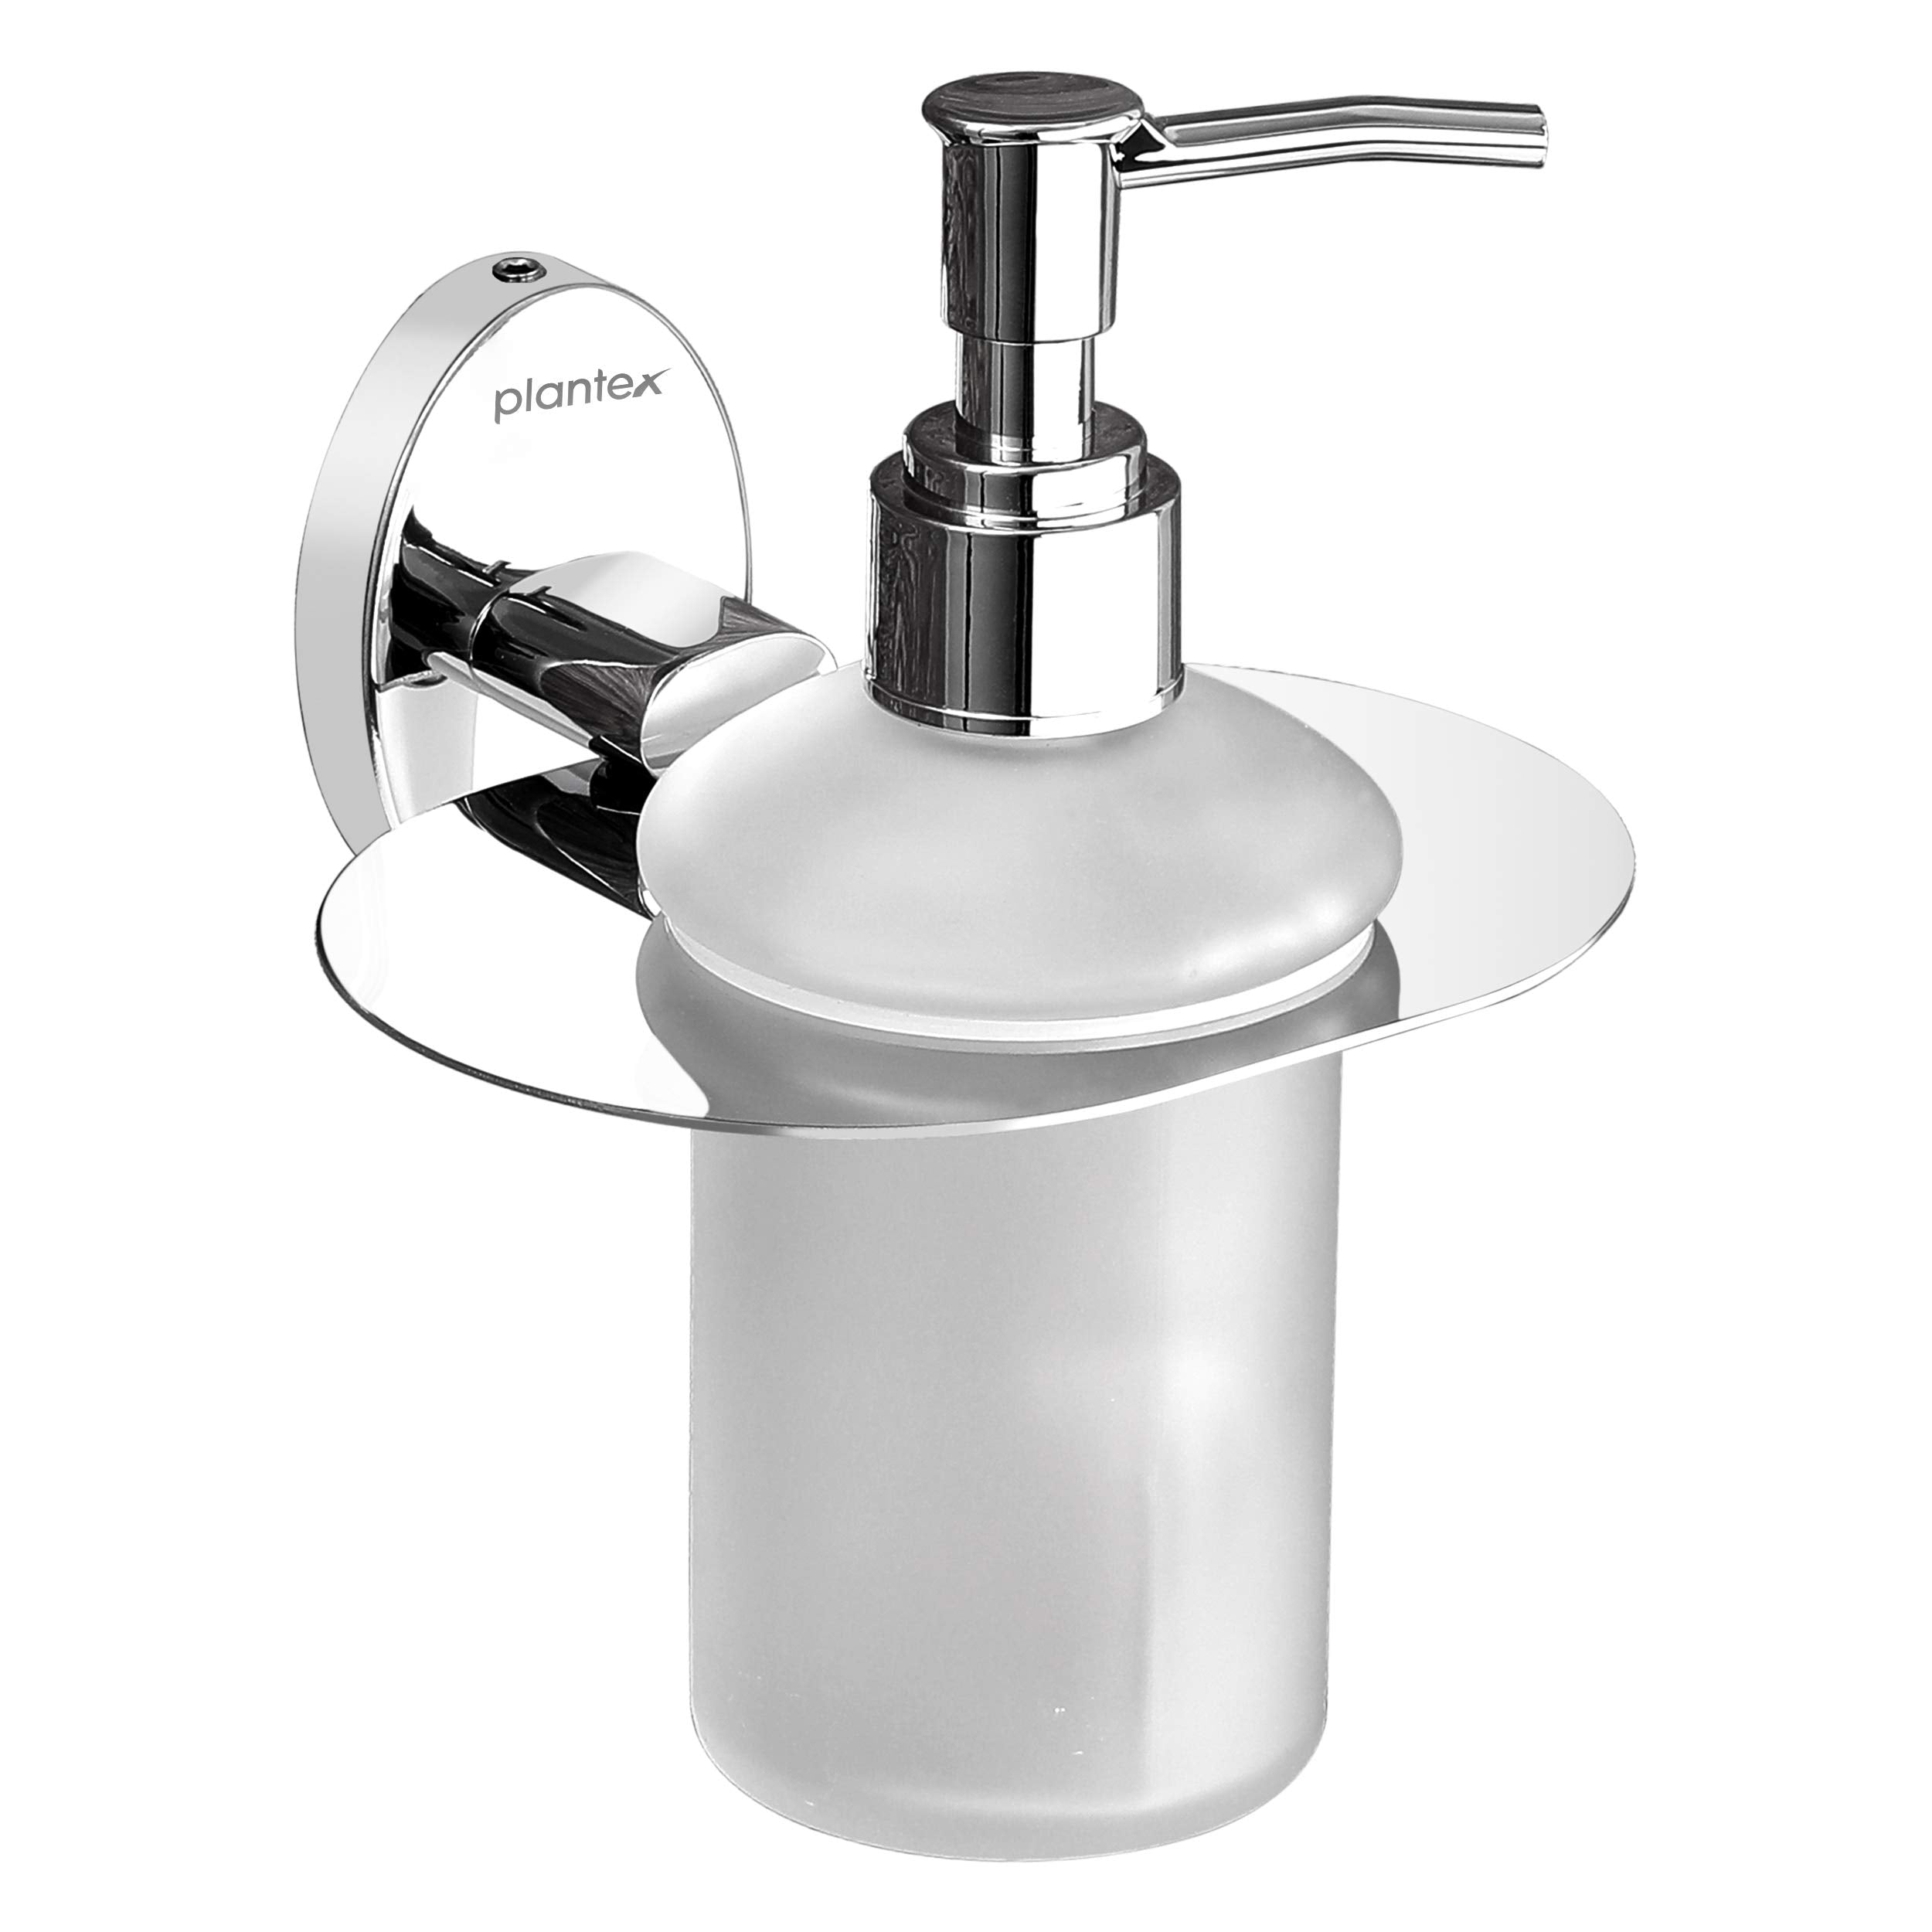 Plantex Olive wash Basin handwash Holder and Dispenser for Liquid soap (304 Stainless Steel)